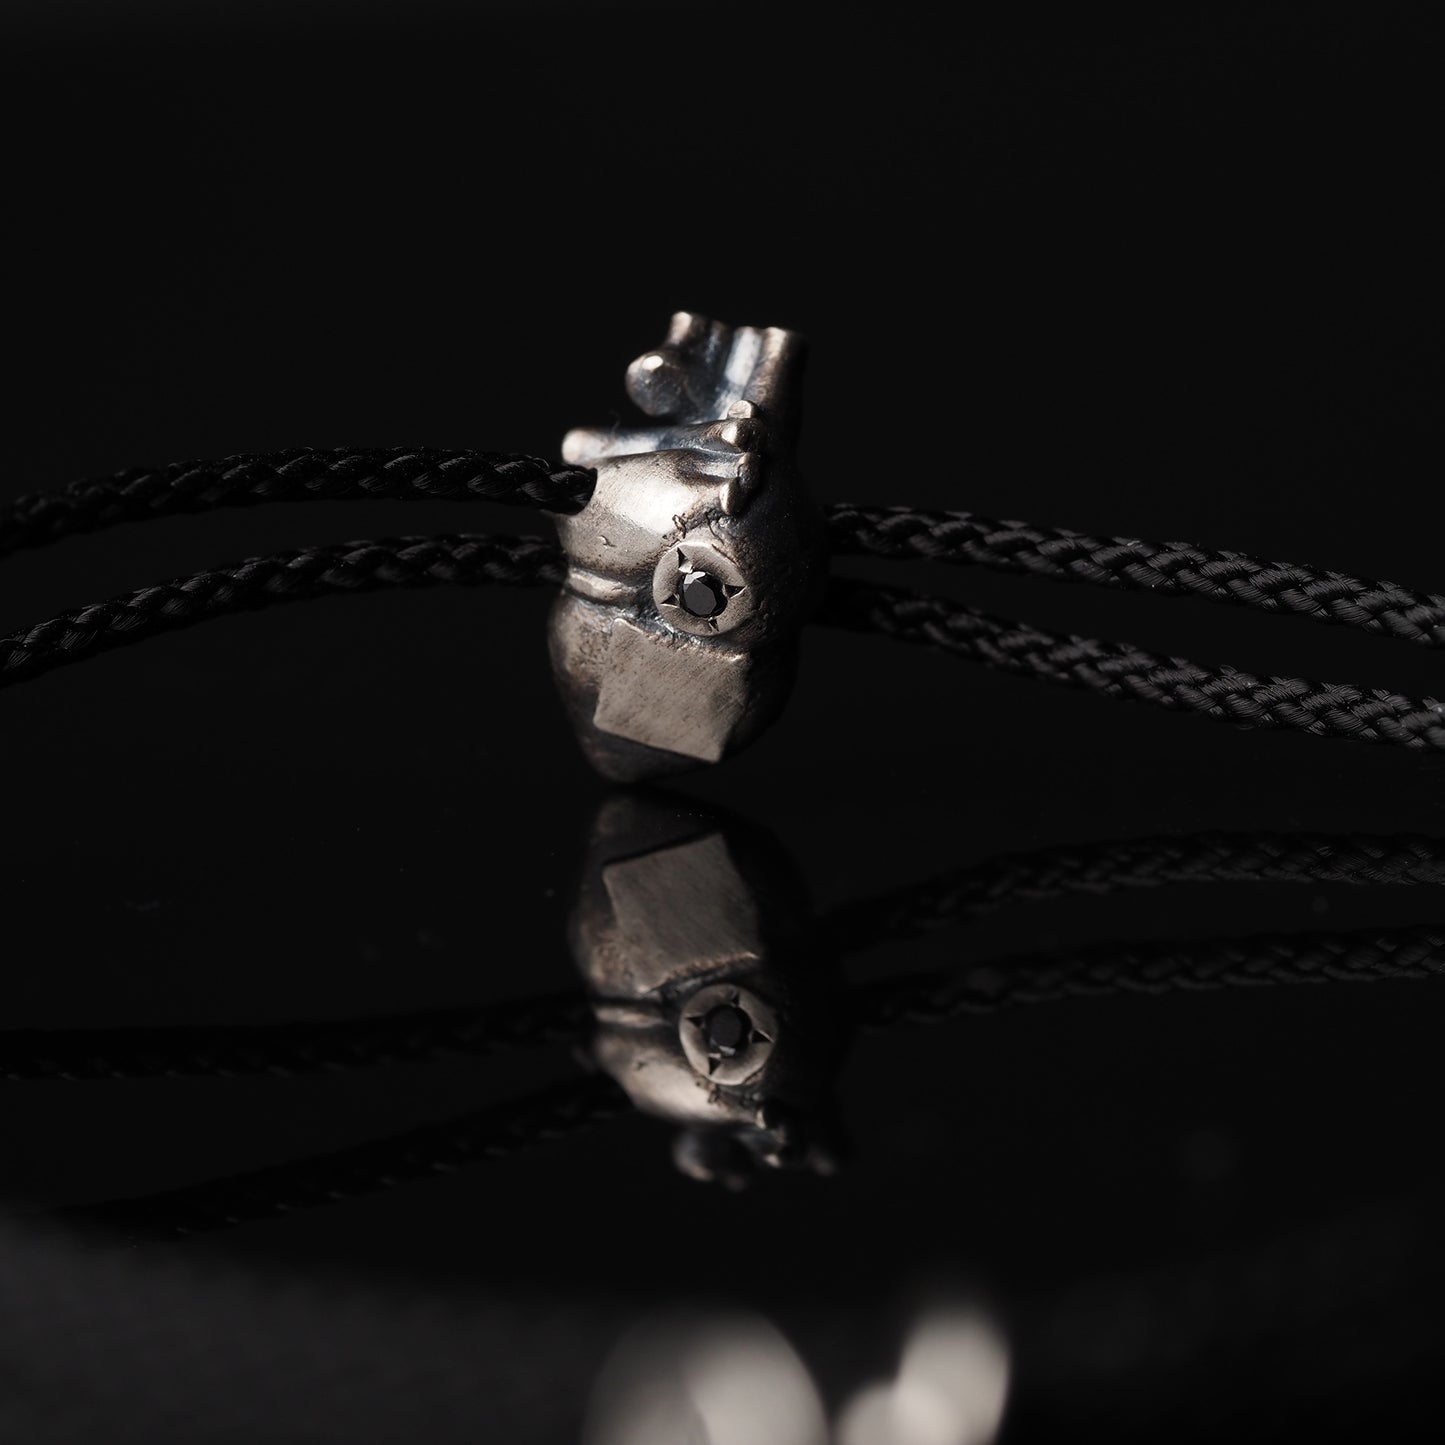 Anatomical Heart Charm Bracelet on Black Macramé Cord with Black Diamond Accent